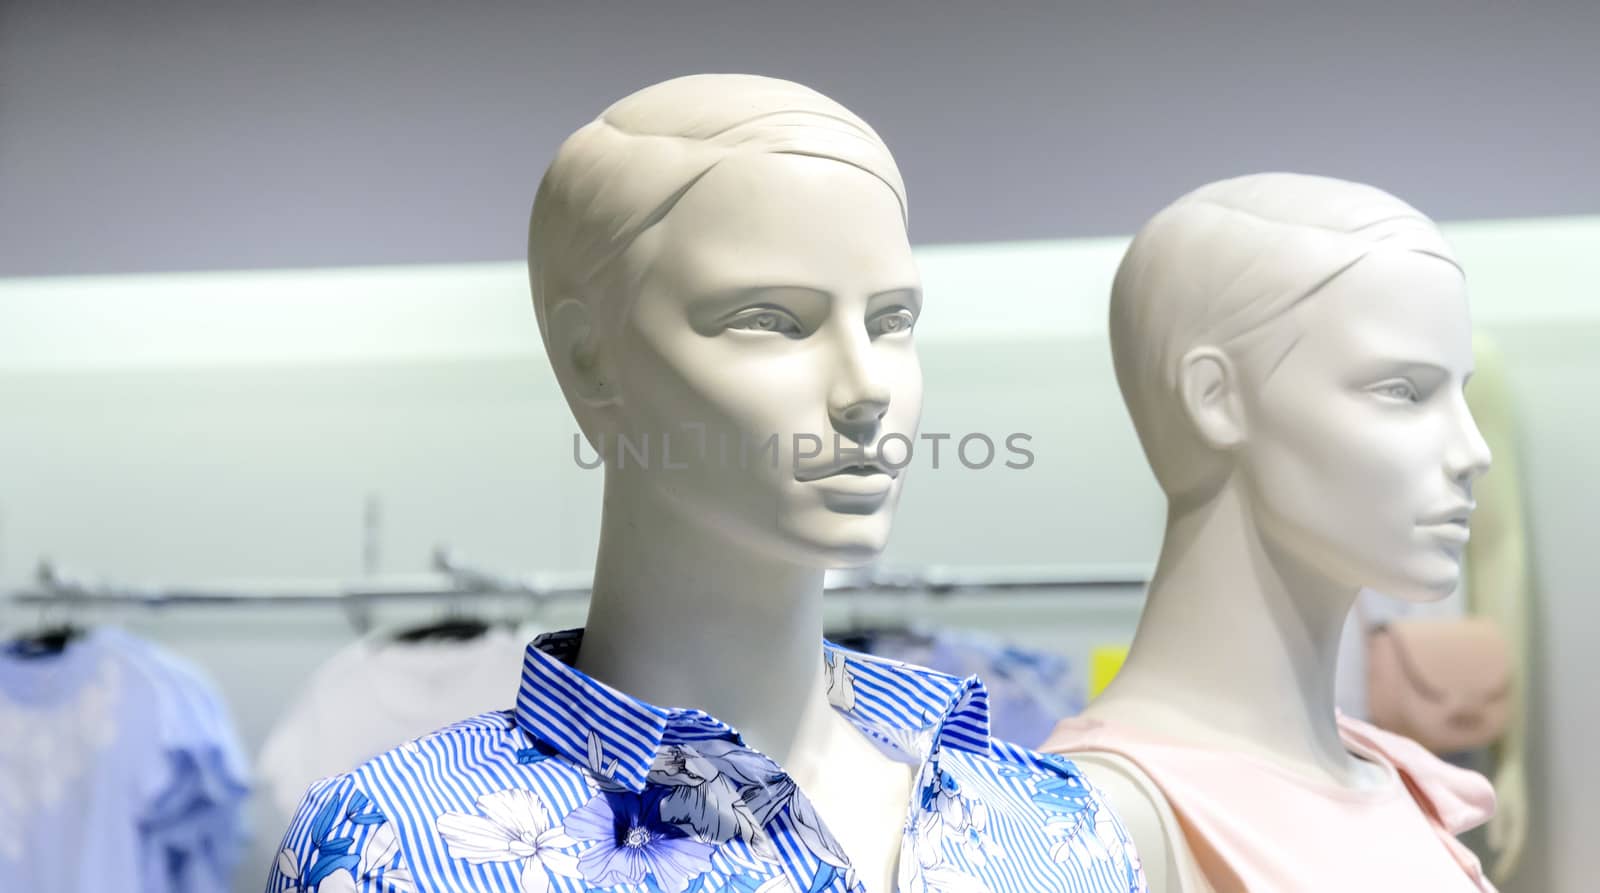 Closeup plastic mannequin heads against blurred shop background by andre_dechapelle